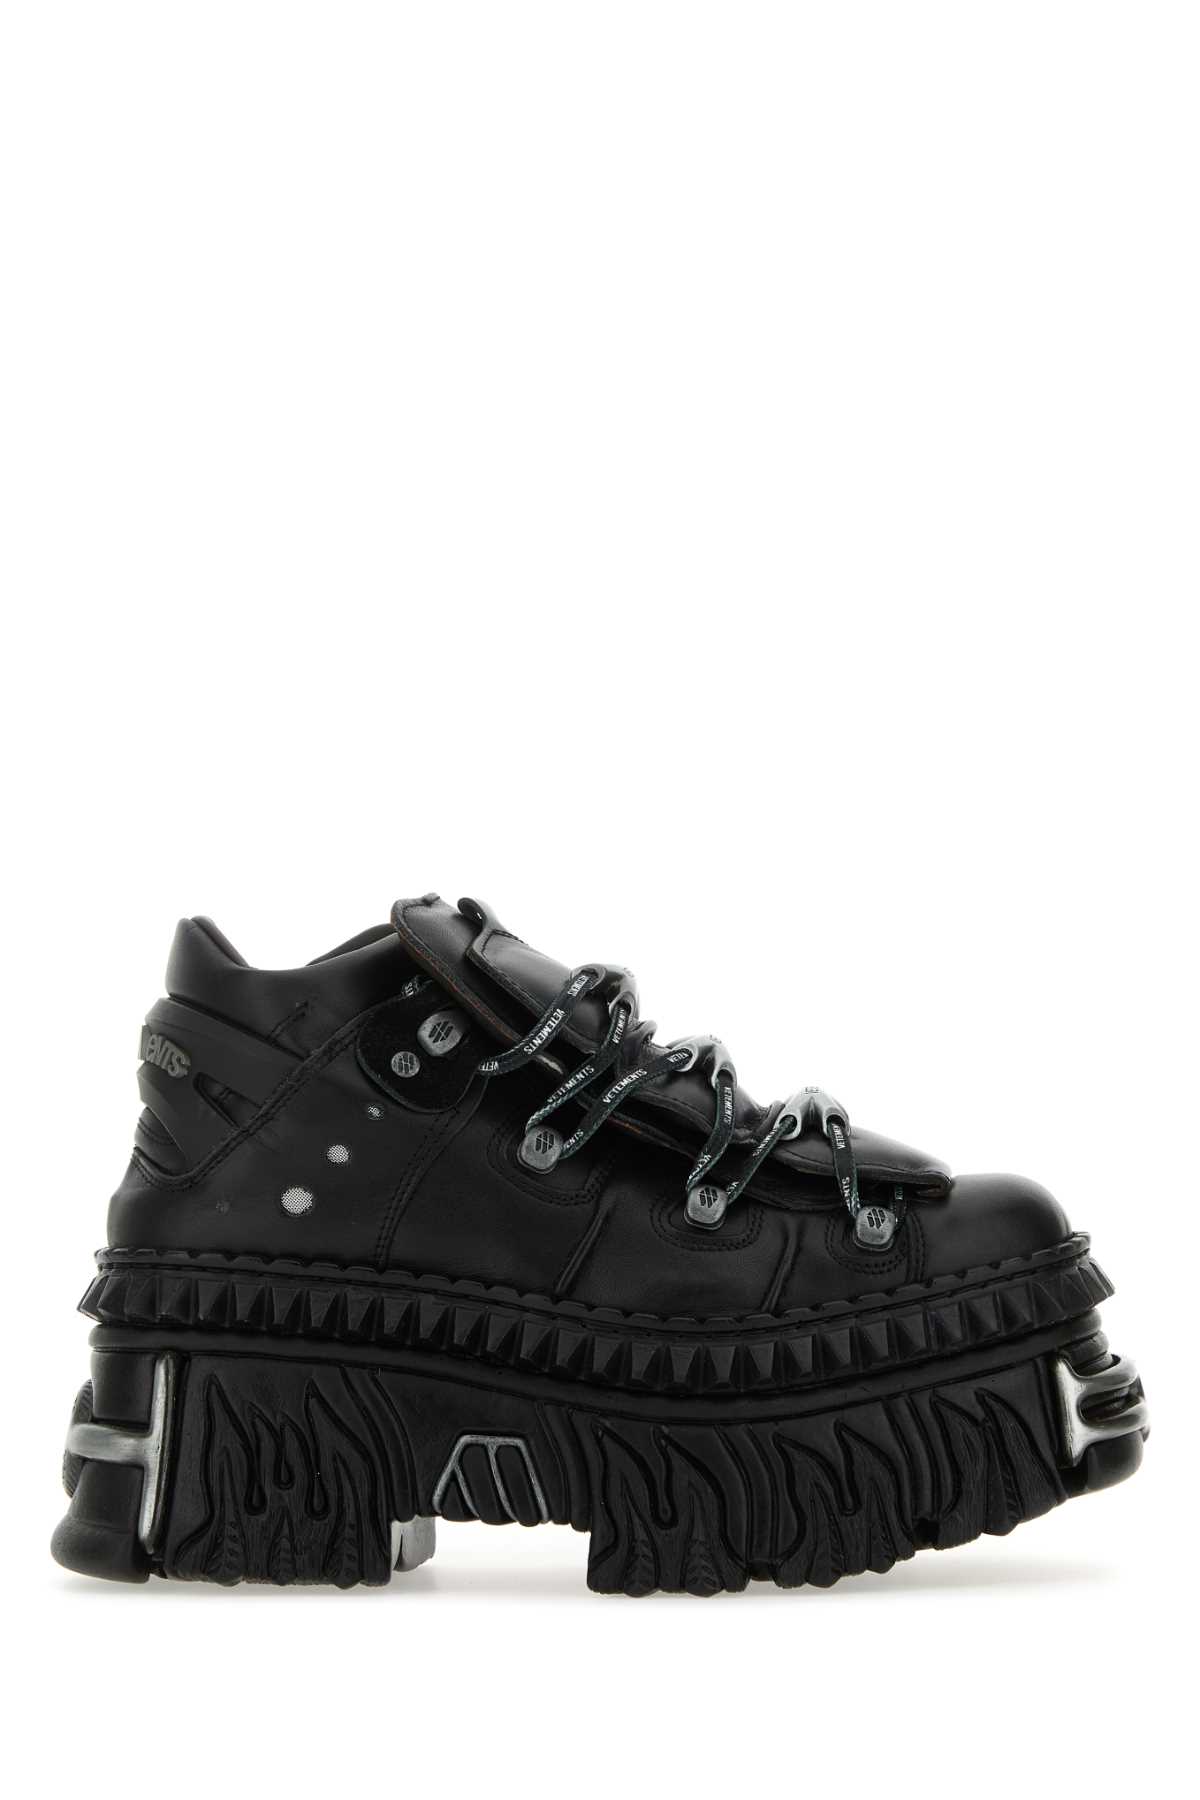 Shop Vetements Black Leather New Rock Sneakers